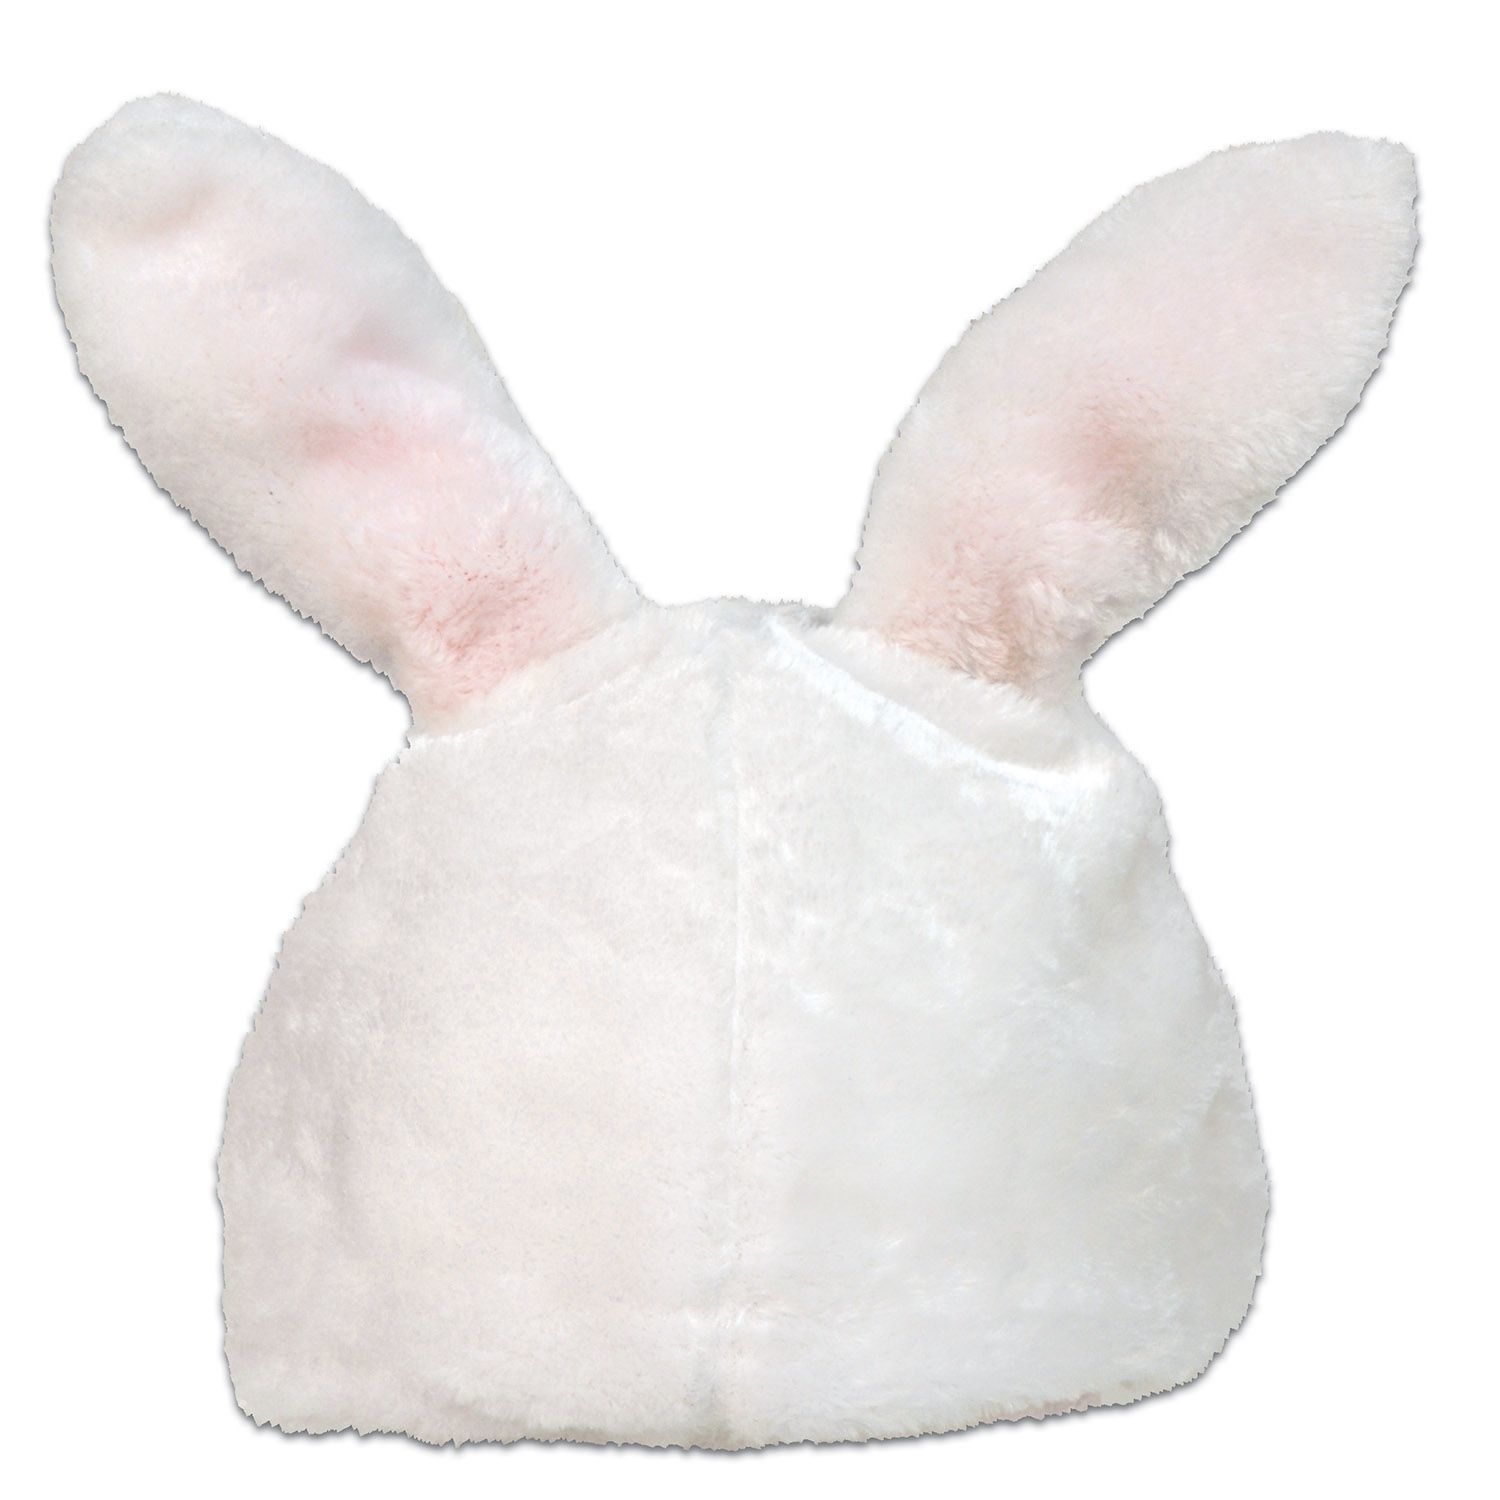 Wholesale Plush Bunny Hats - White & Pink